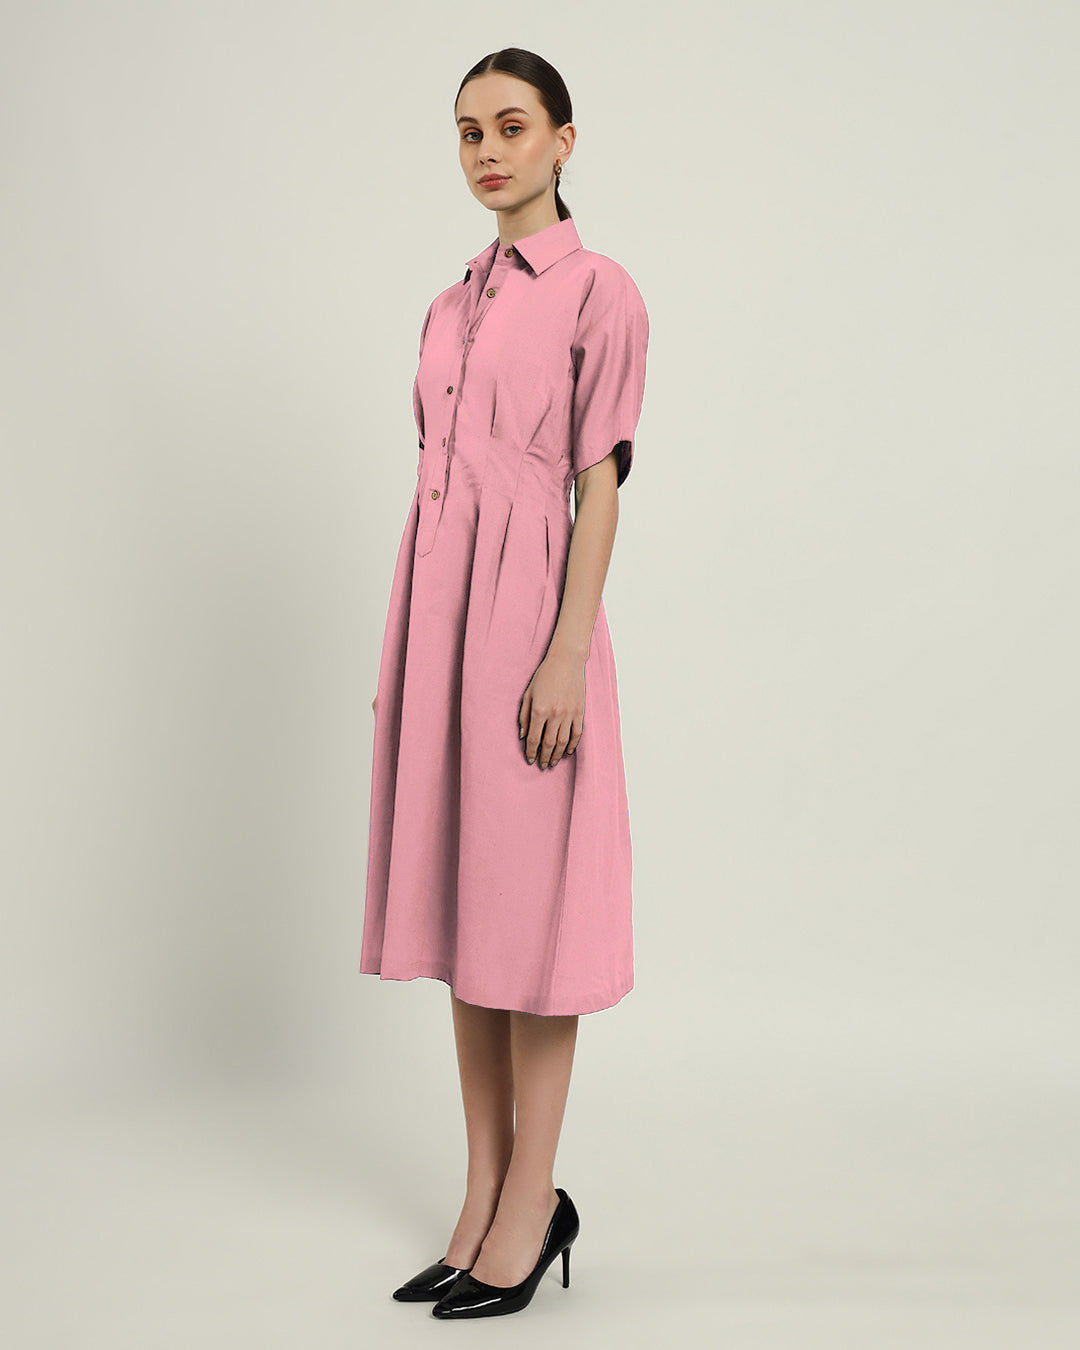 The Salford Fondant Pink Dress